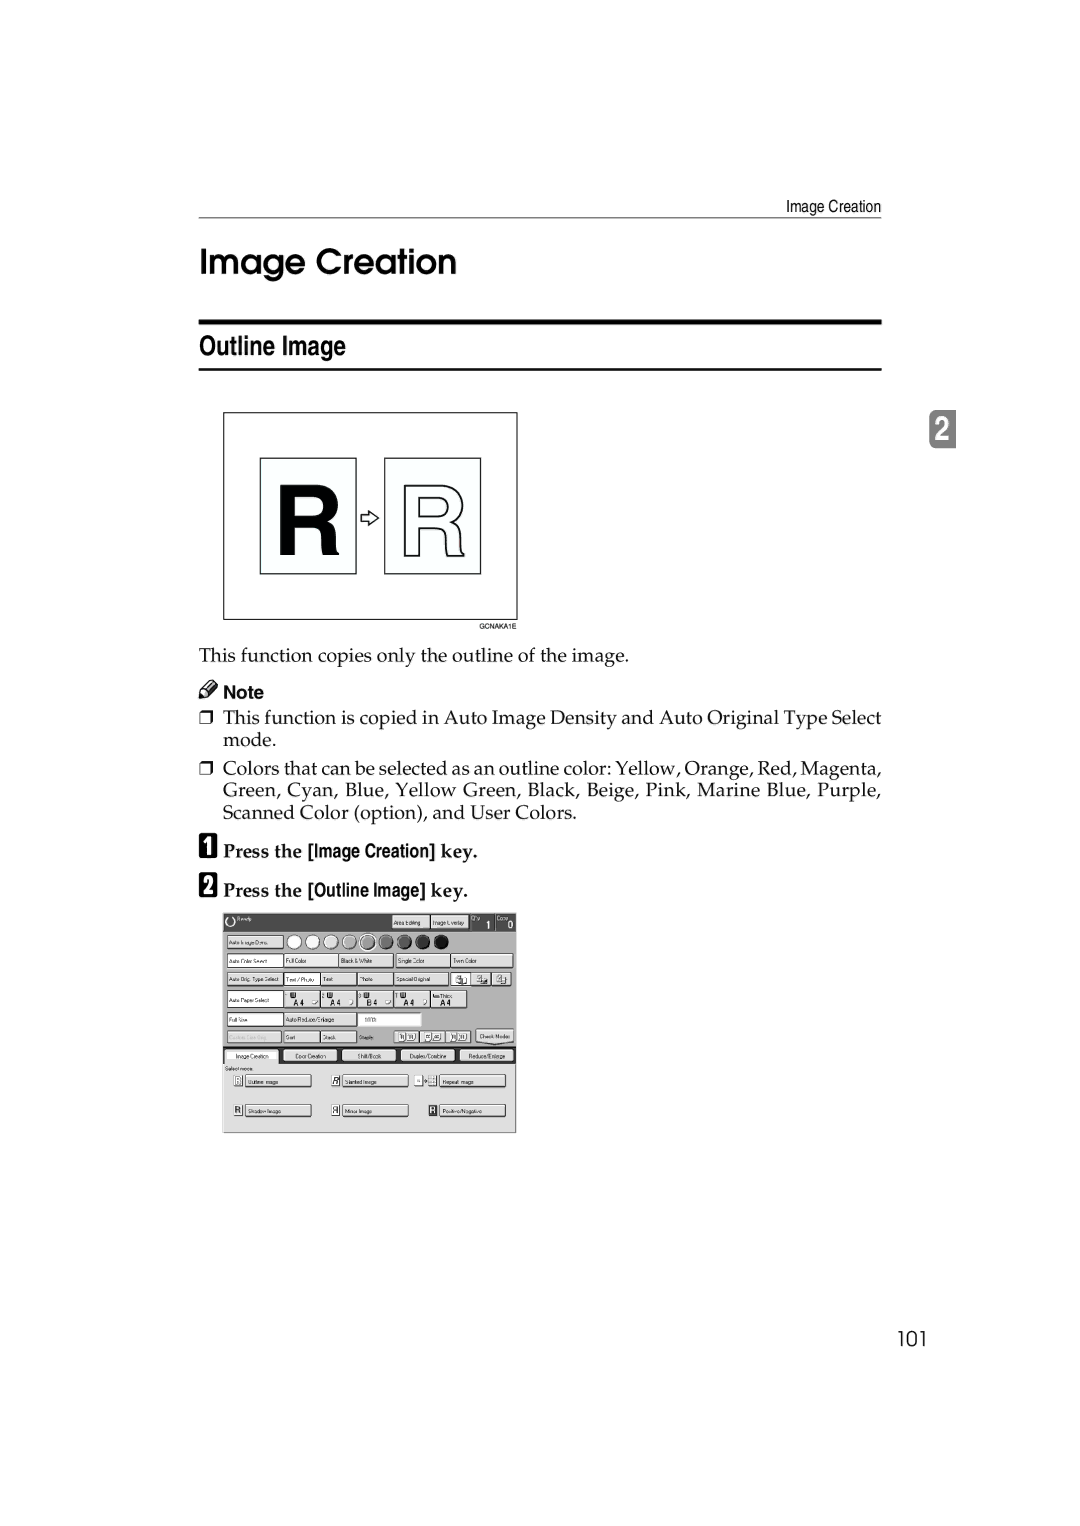 Ricoh 6513 manual 101, Press the Image Creation key Press the Outline Image key 